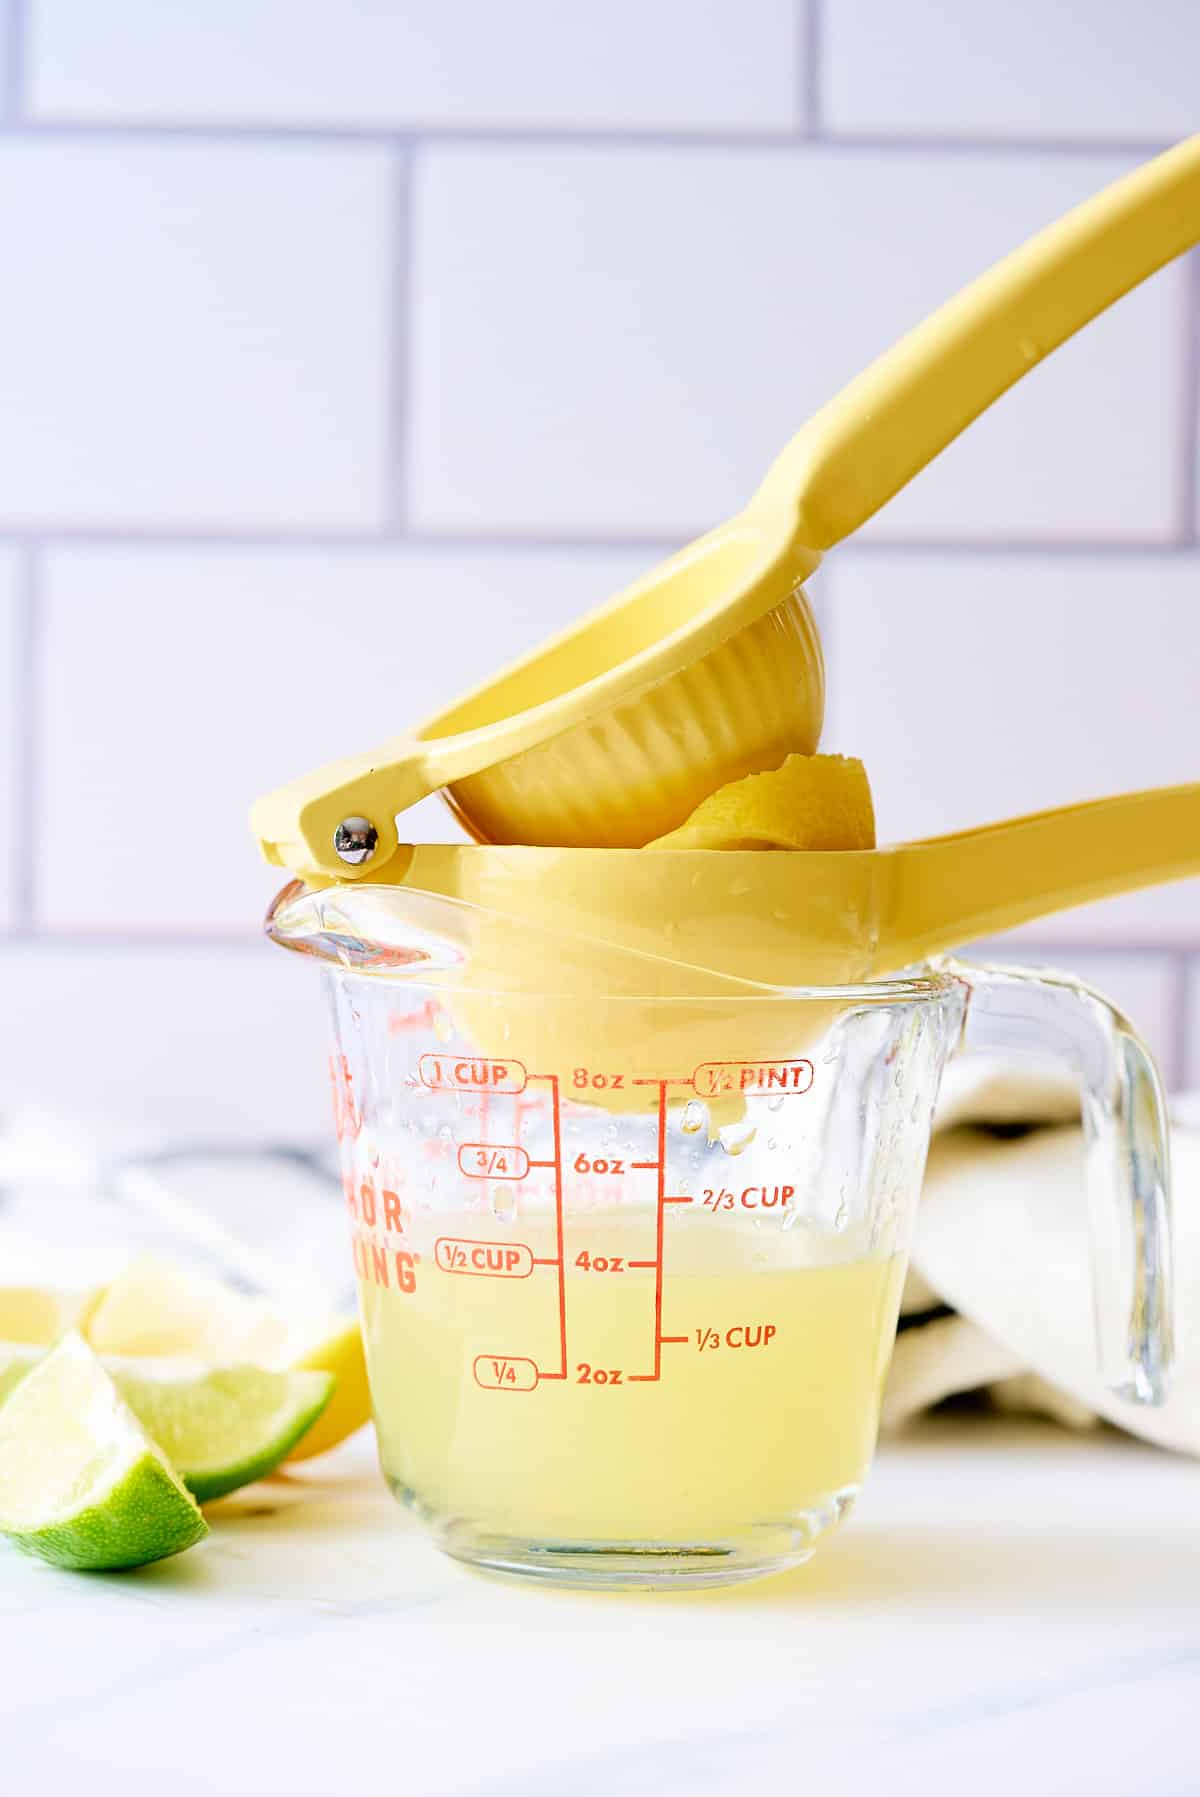 A hand held lemon press squeezing fresh lemon juice into a glass jug.